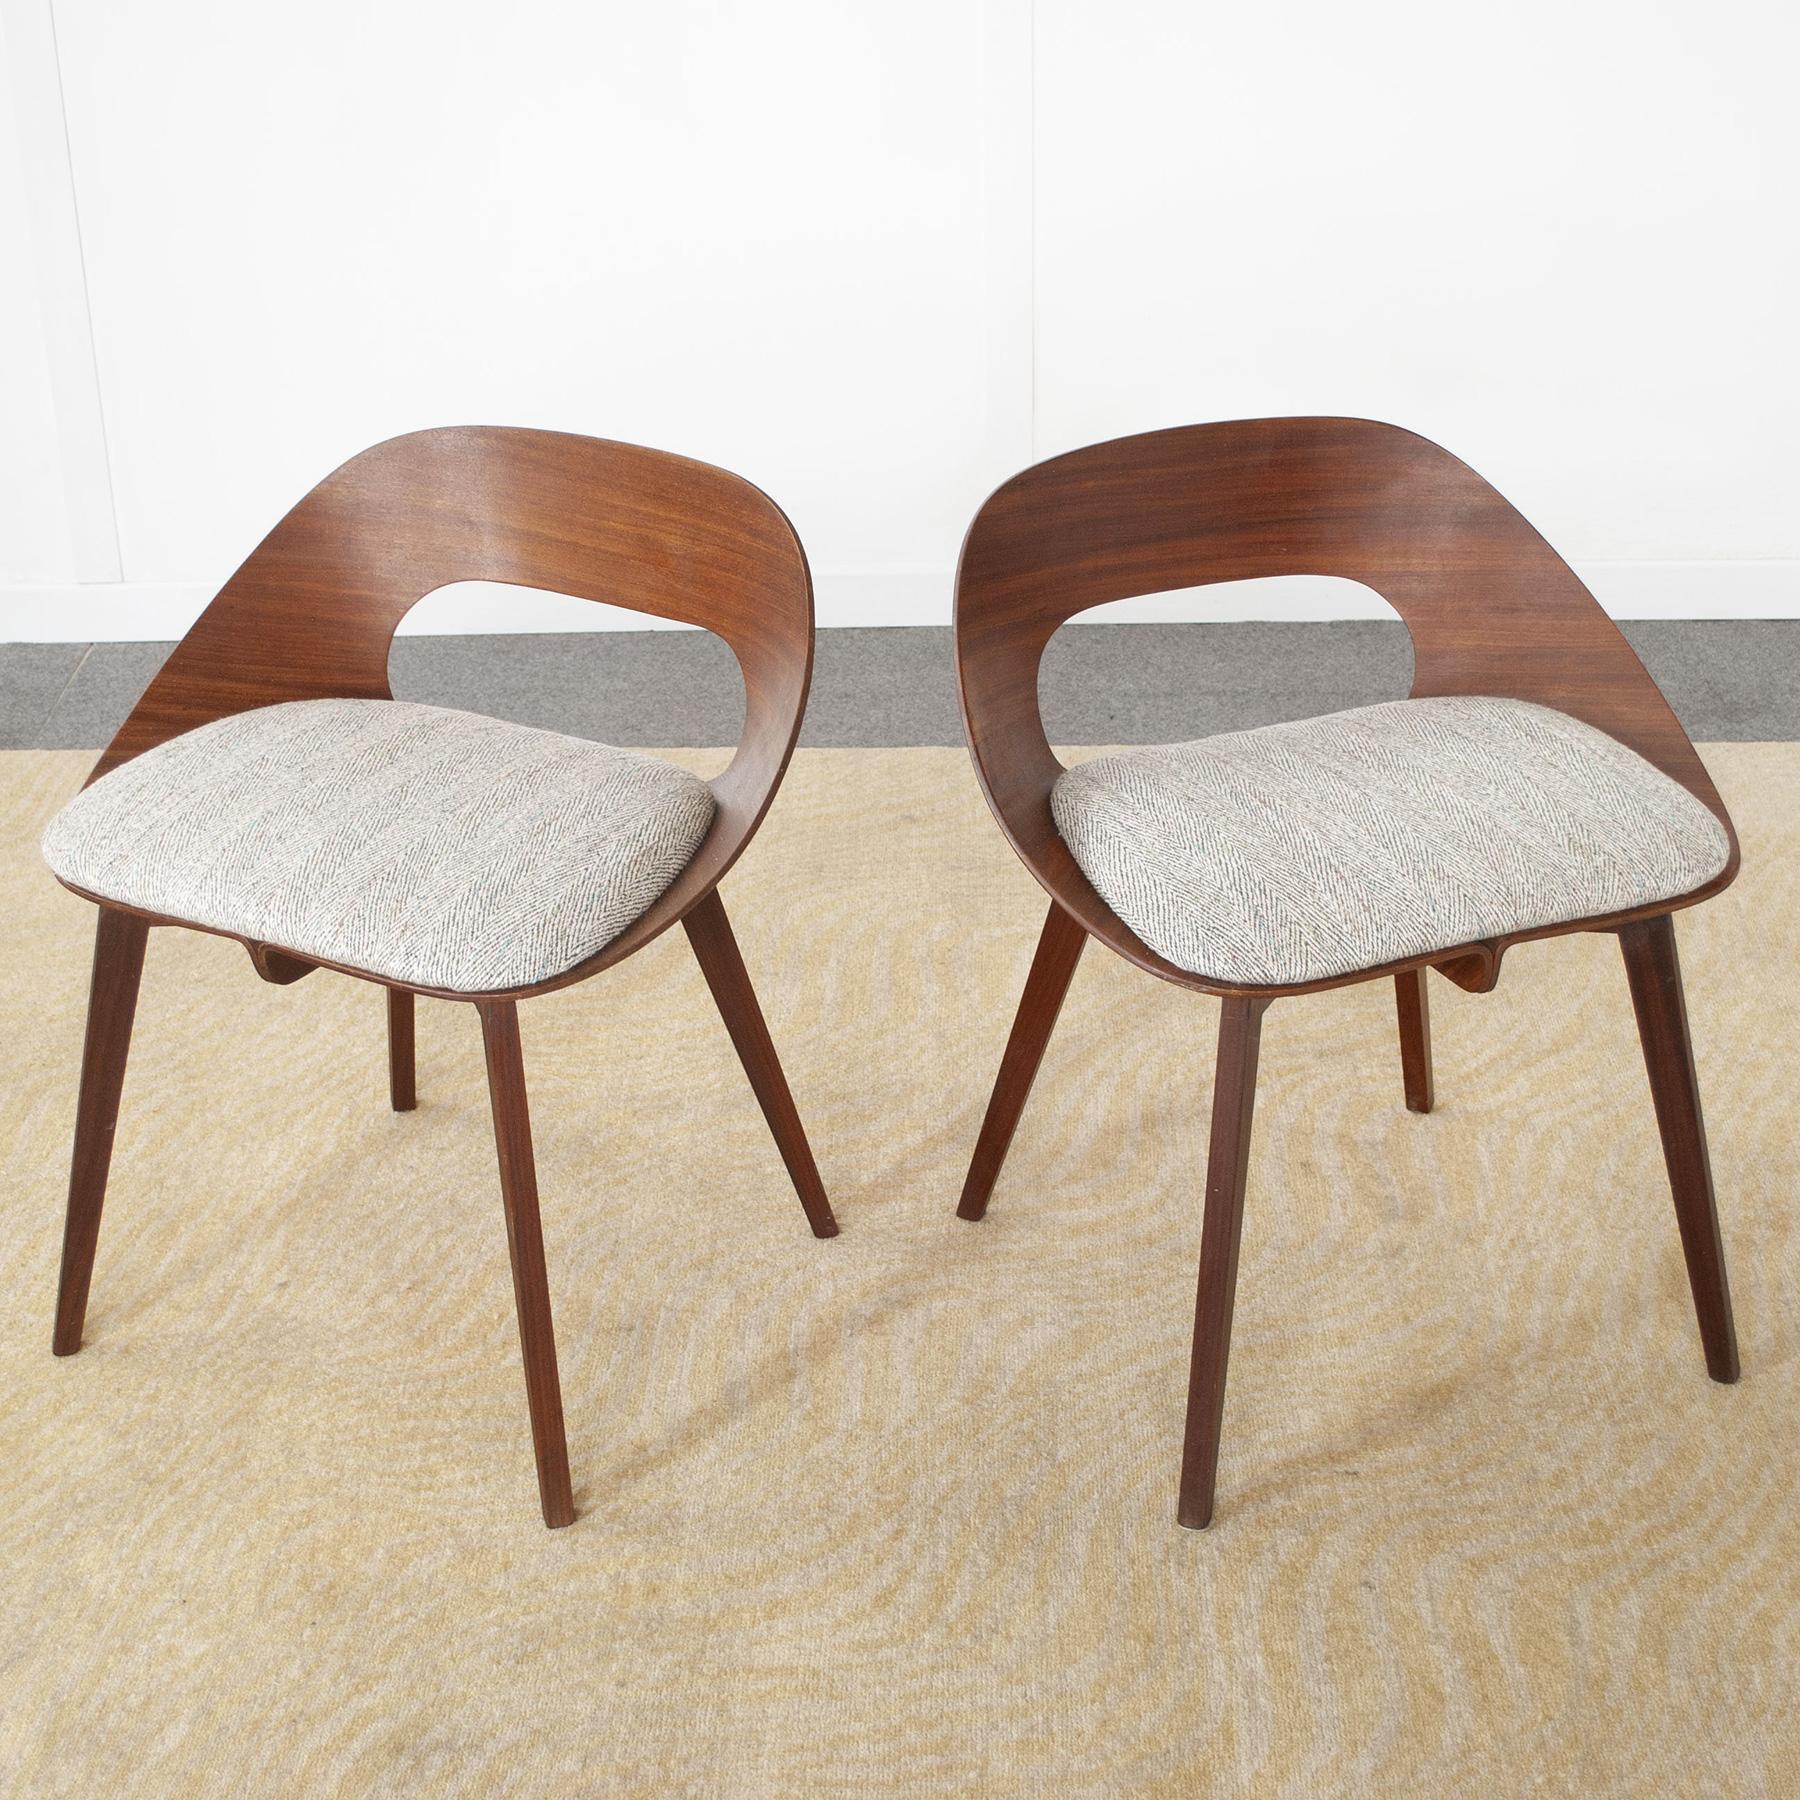 Eero saarinen in the style set of two chairs mid fifties 2